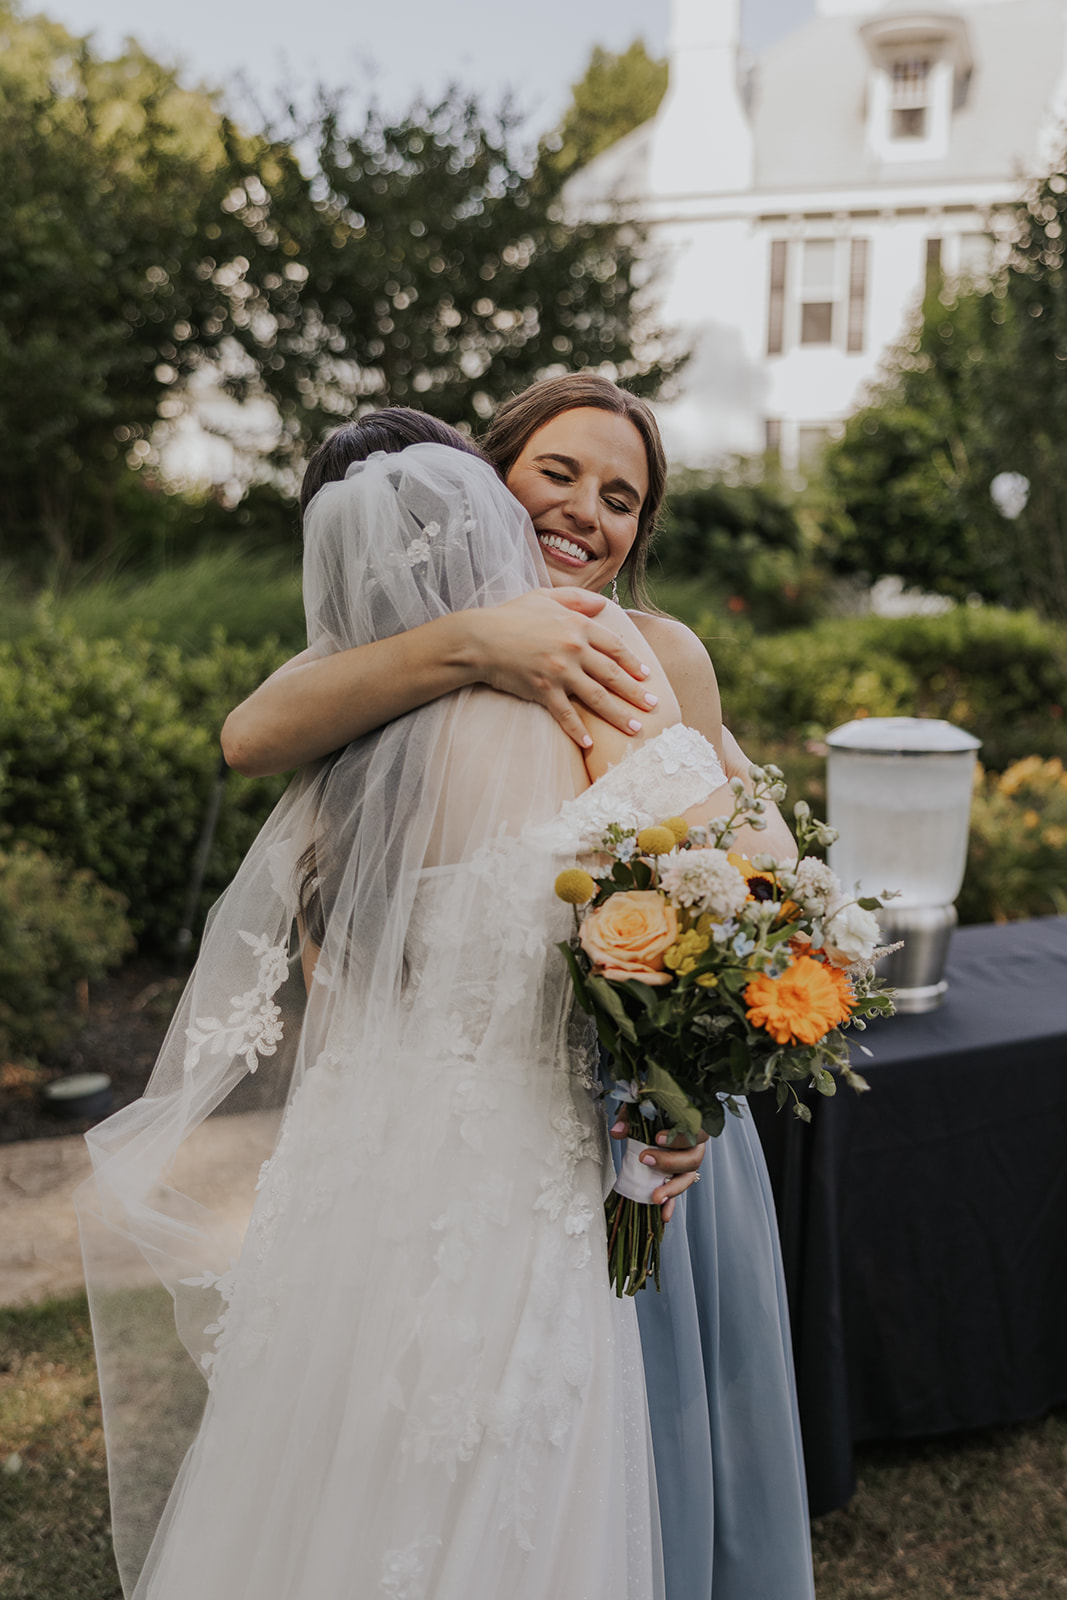 Beautiful bride shares a hug with a friend after her sentimental Georgia wedding